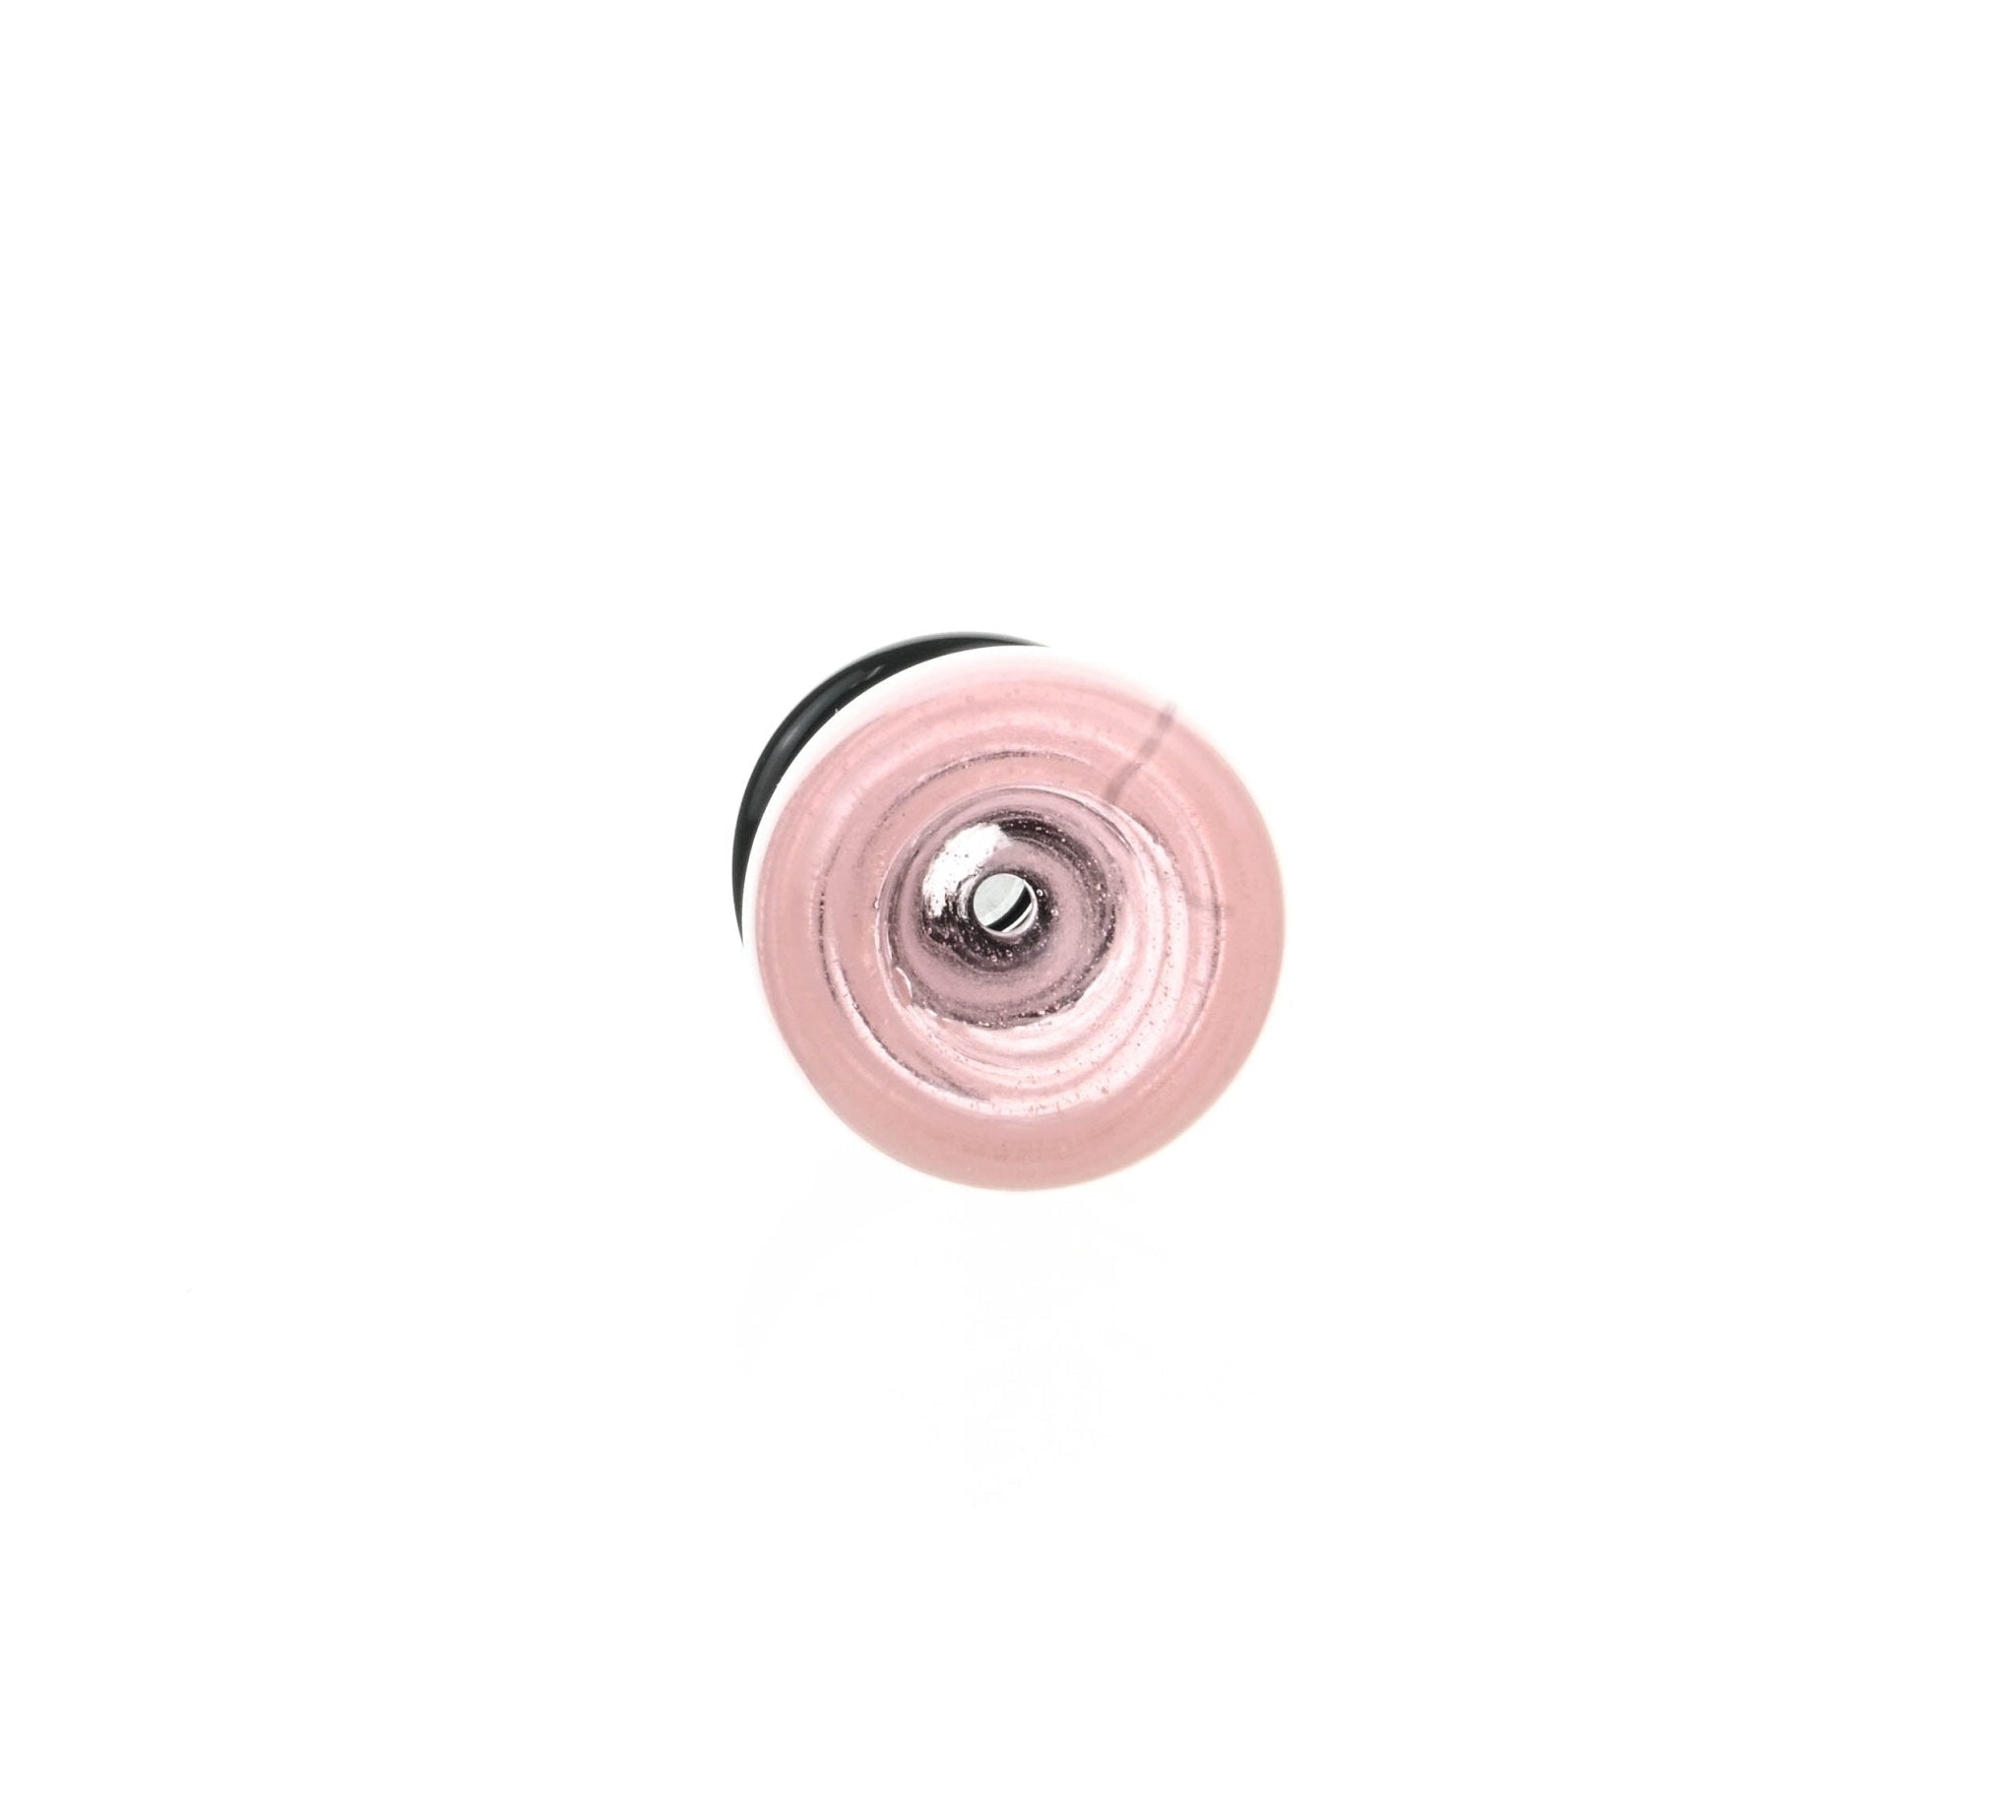 Joe Madigan Swirl Pink Round bowl 14 mm - Smoke Spot Smoke Shop